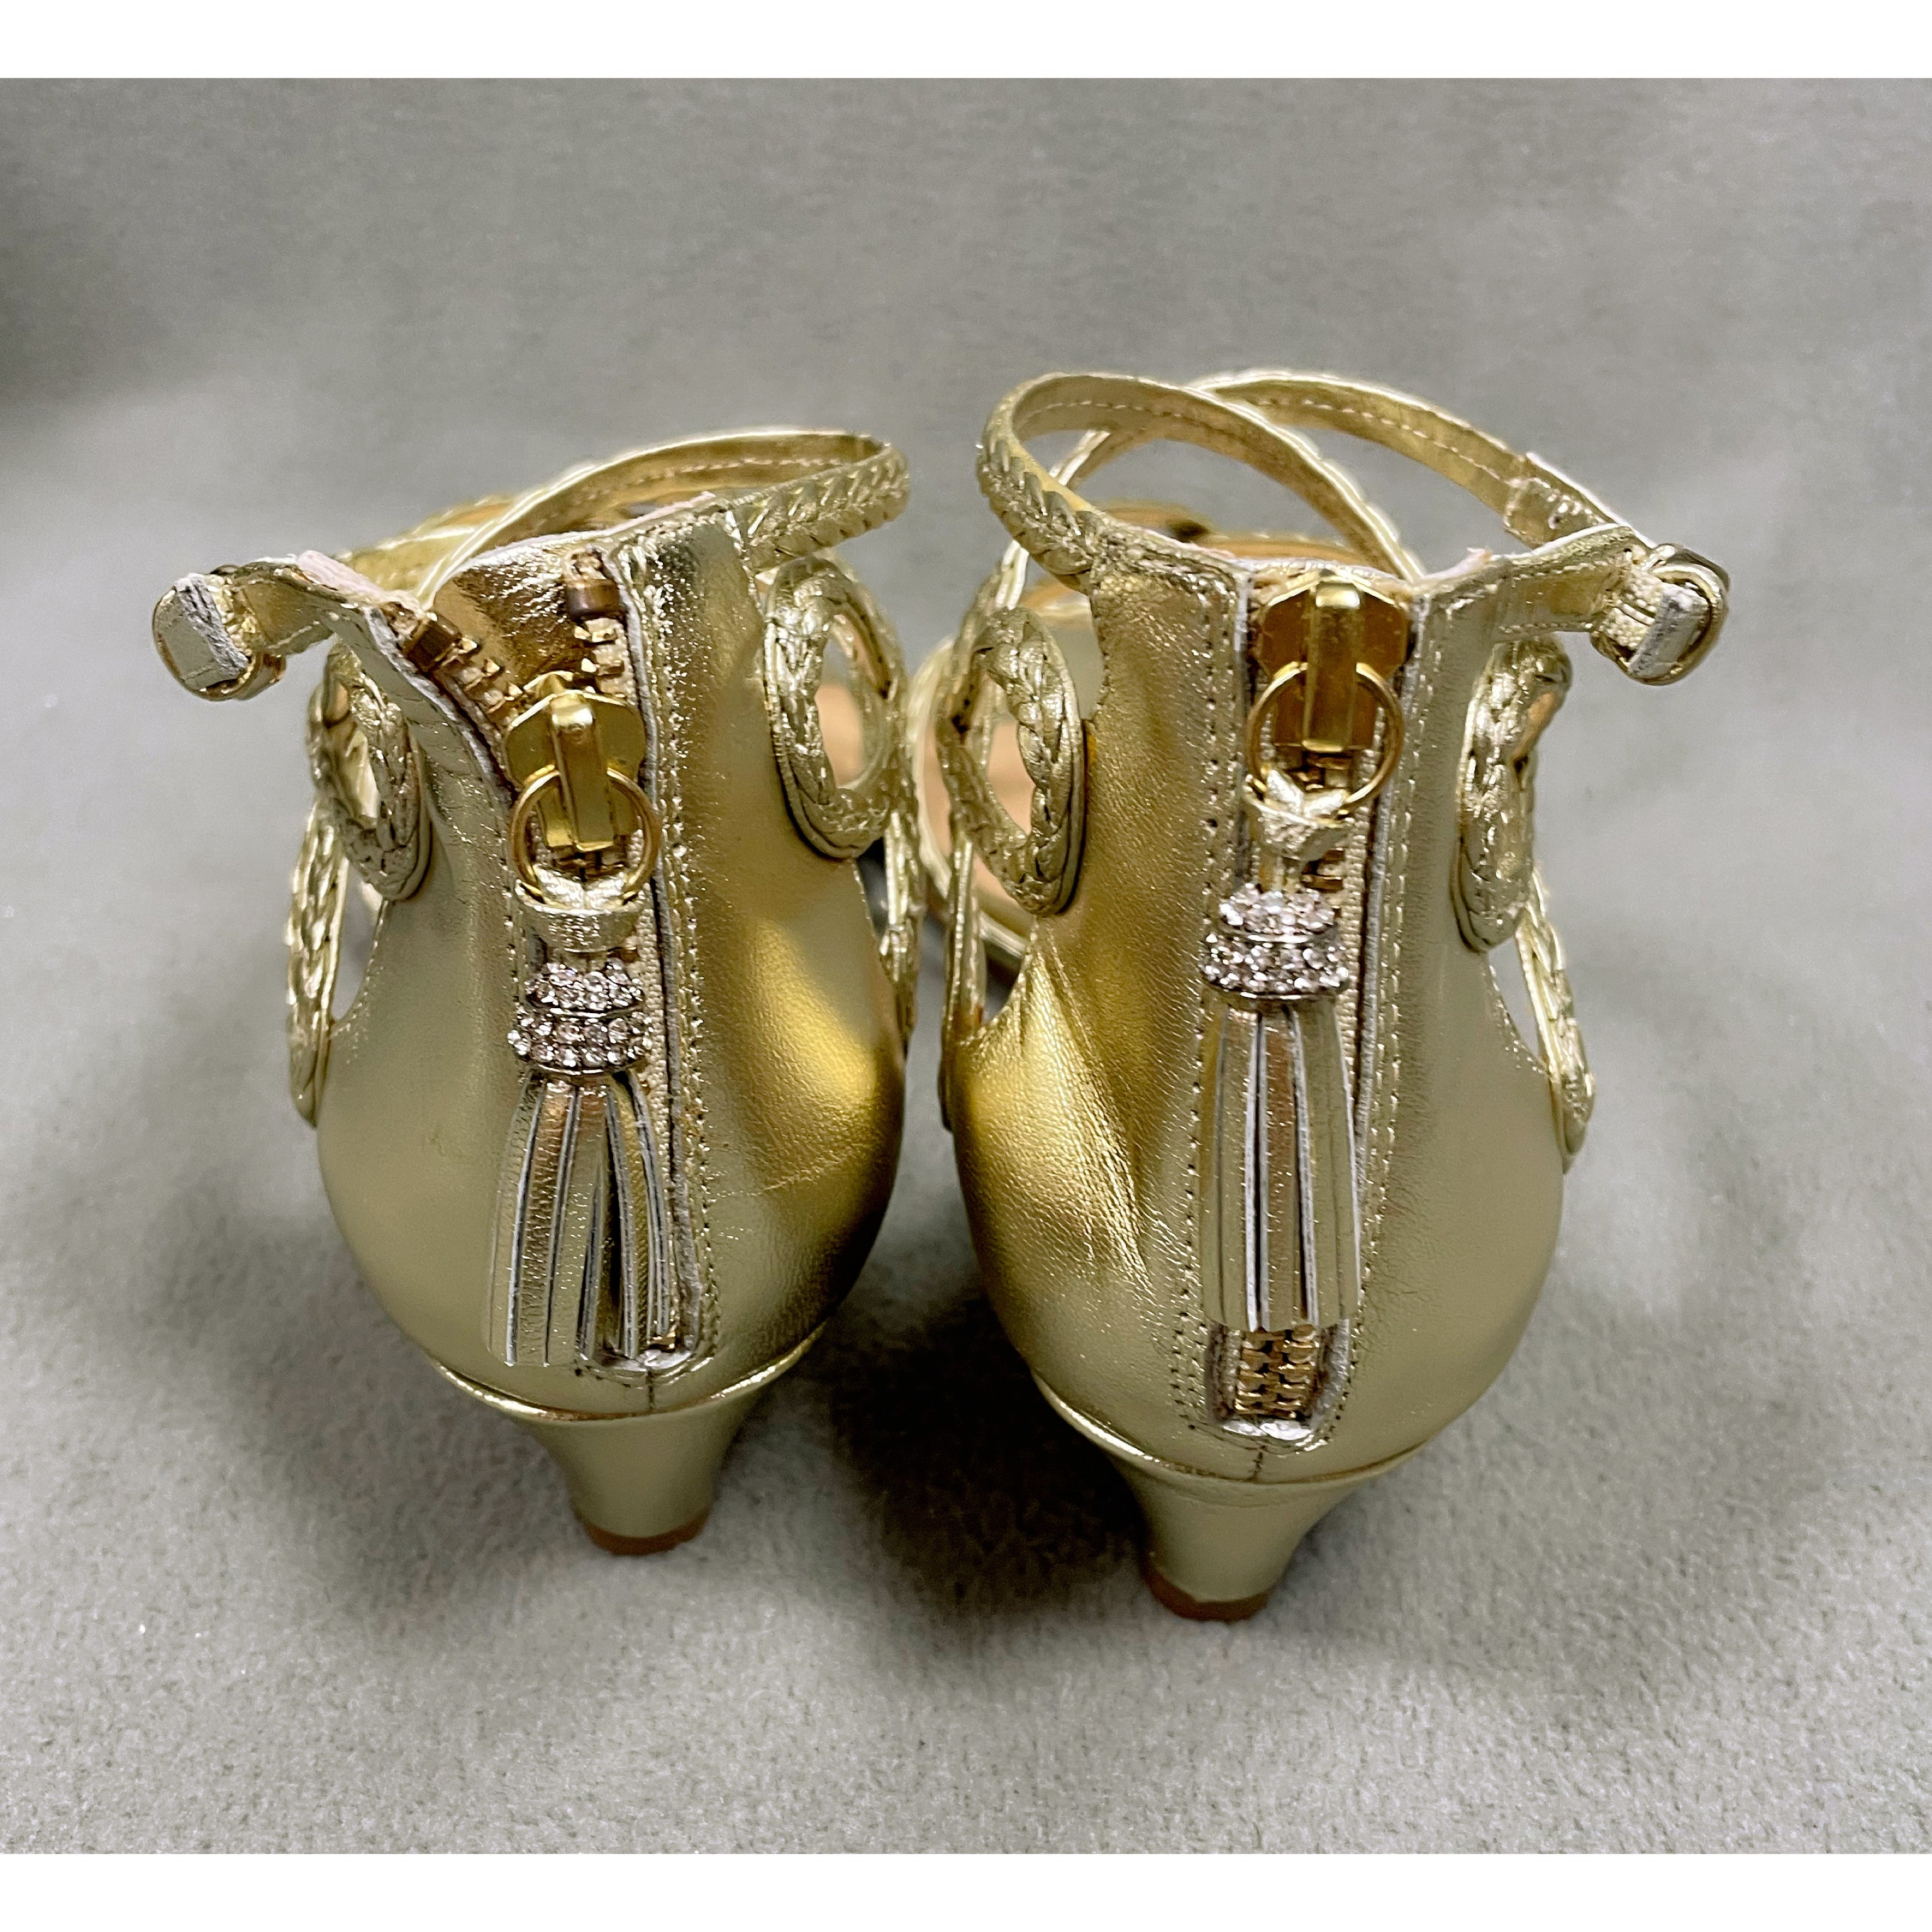 Badgley Mischka gold Corinne sandal, size 6, NEW IN BOX!